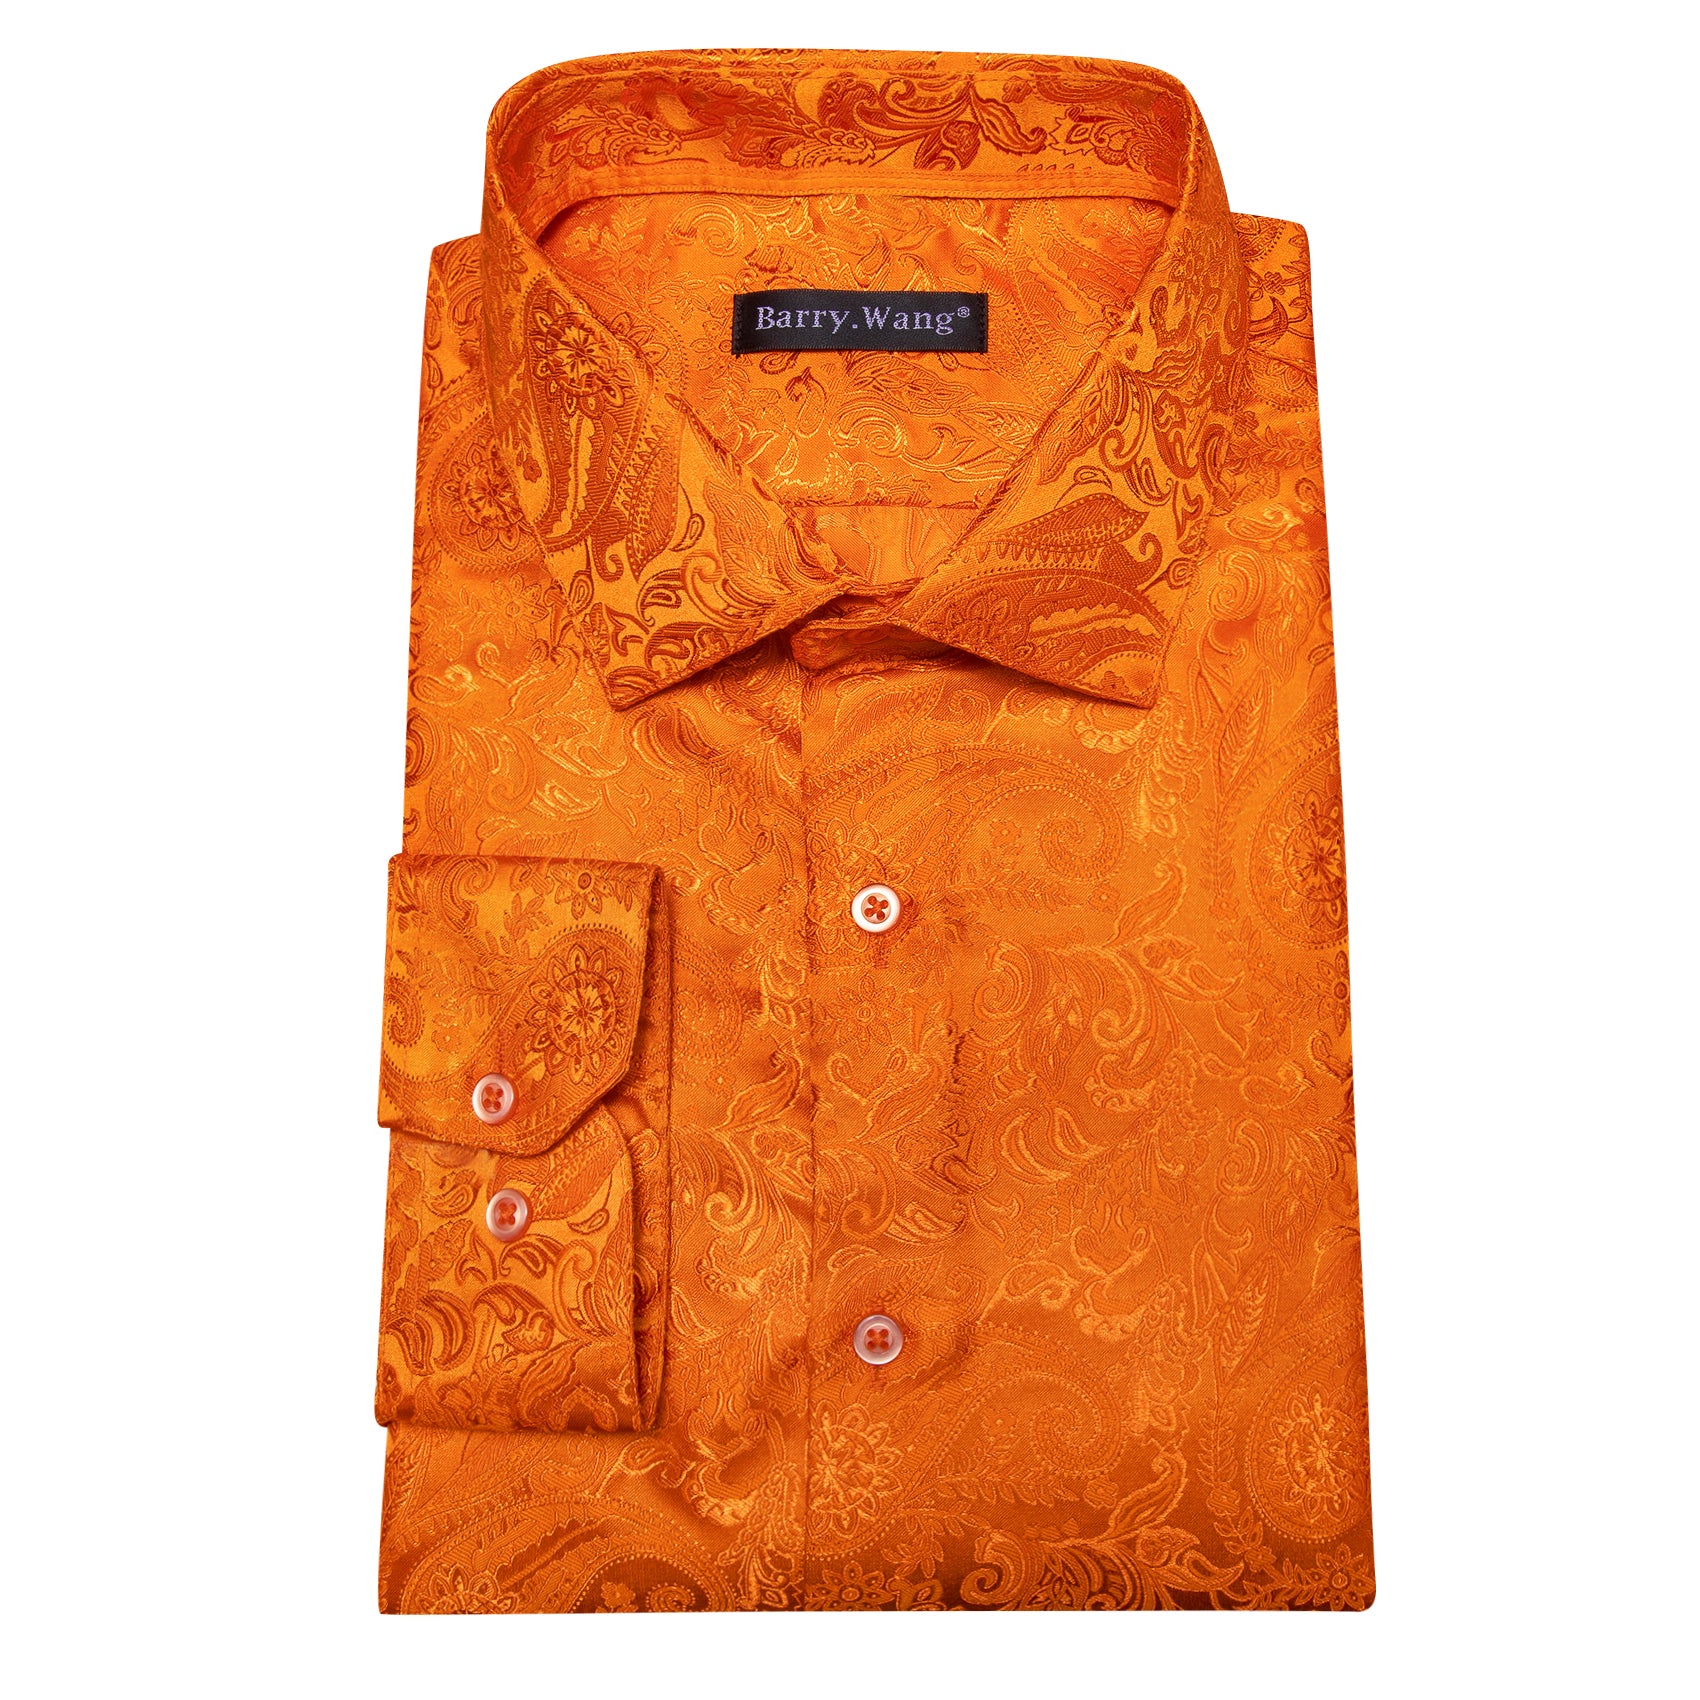 Barry.wang Orange Paisley Men's Silk Shirt